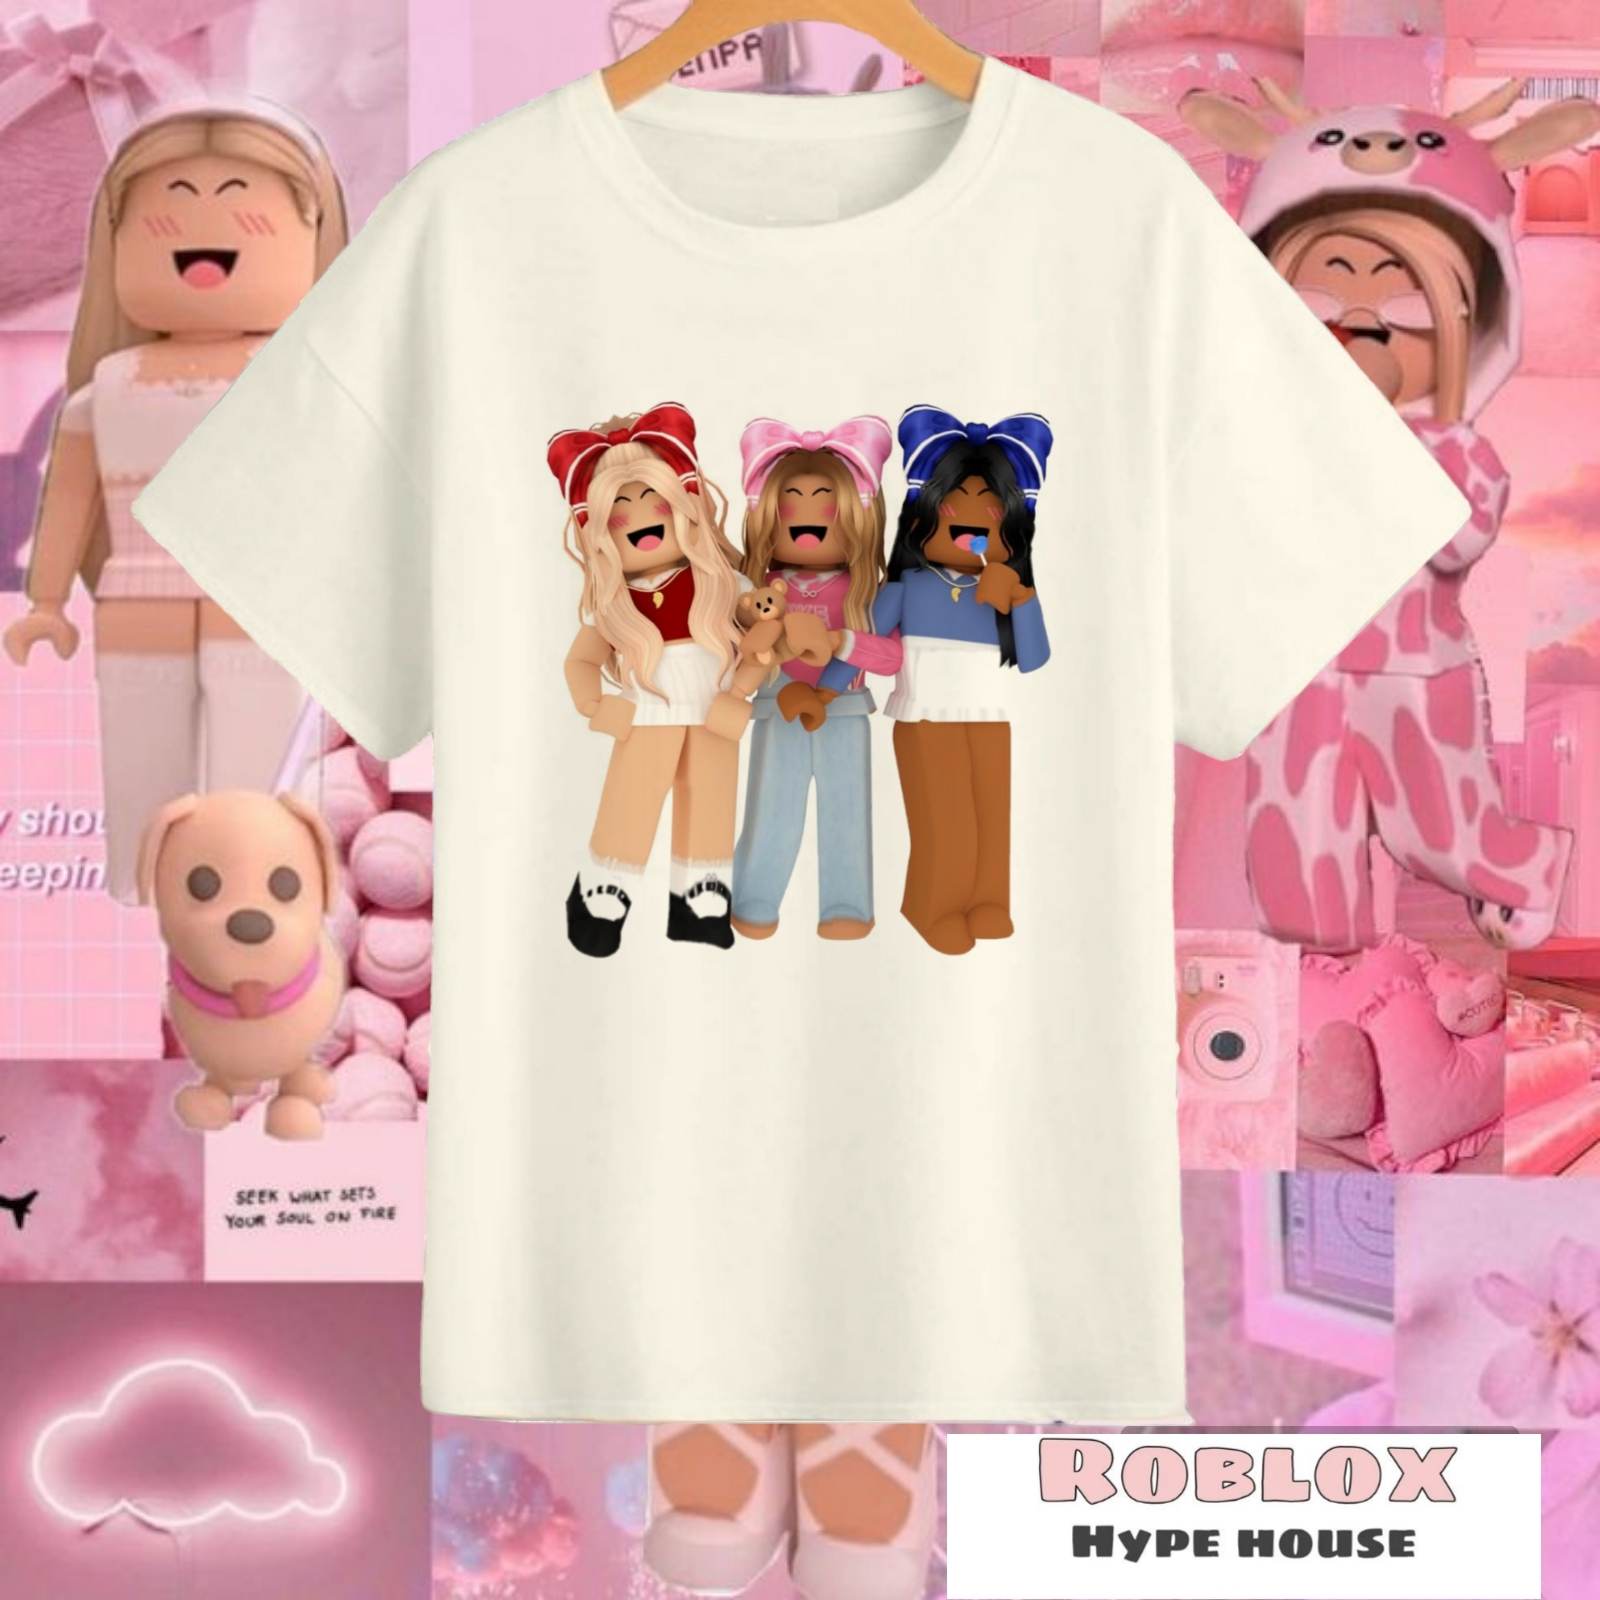 T-shirt roblox  Shirts for girls, Free t shirt design, Roblox t-shirt